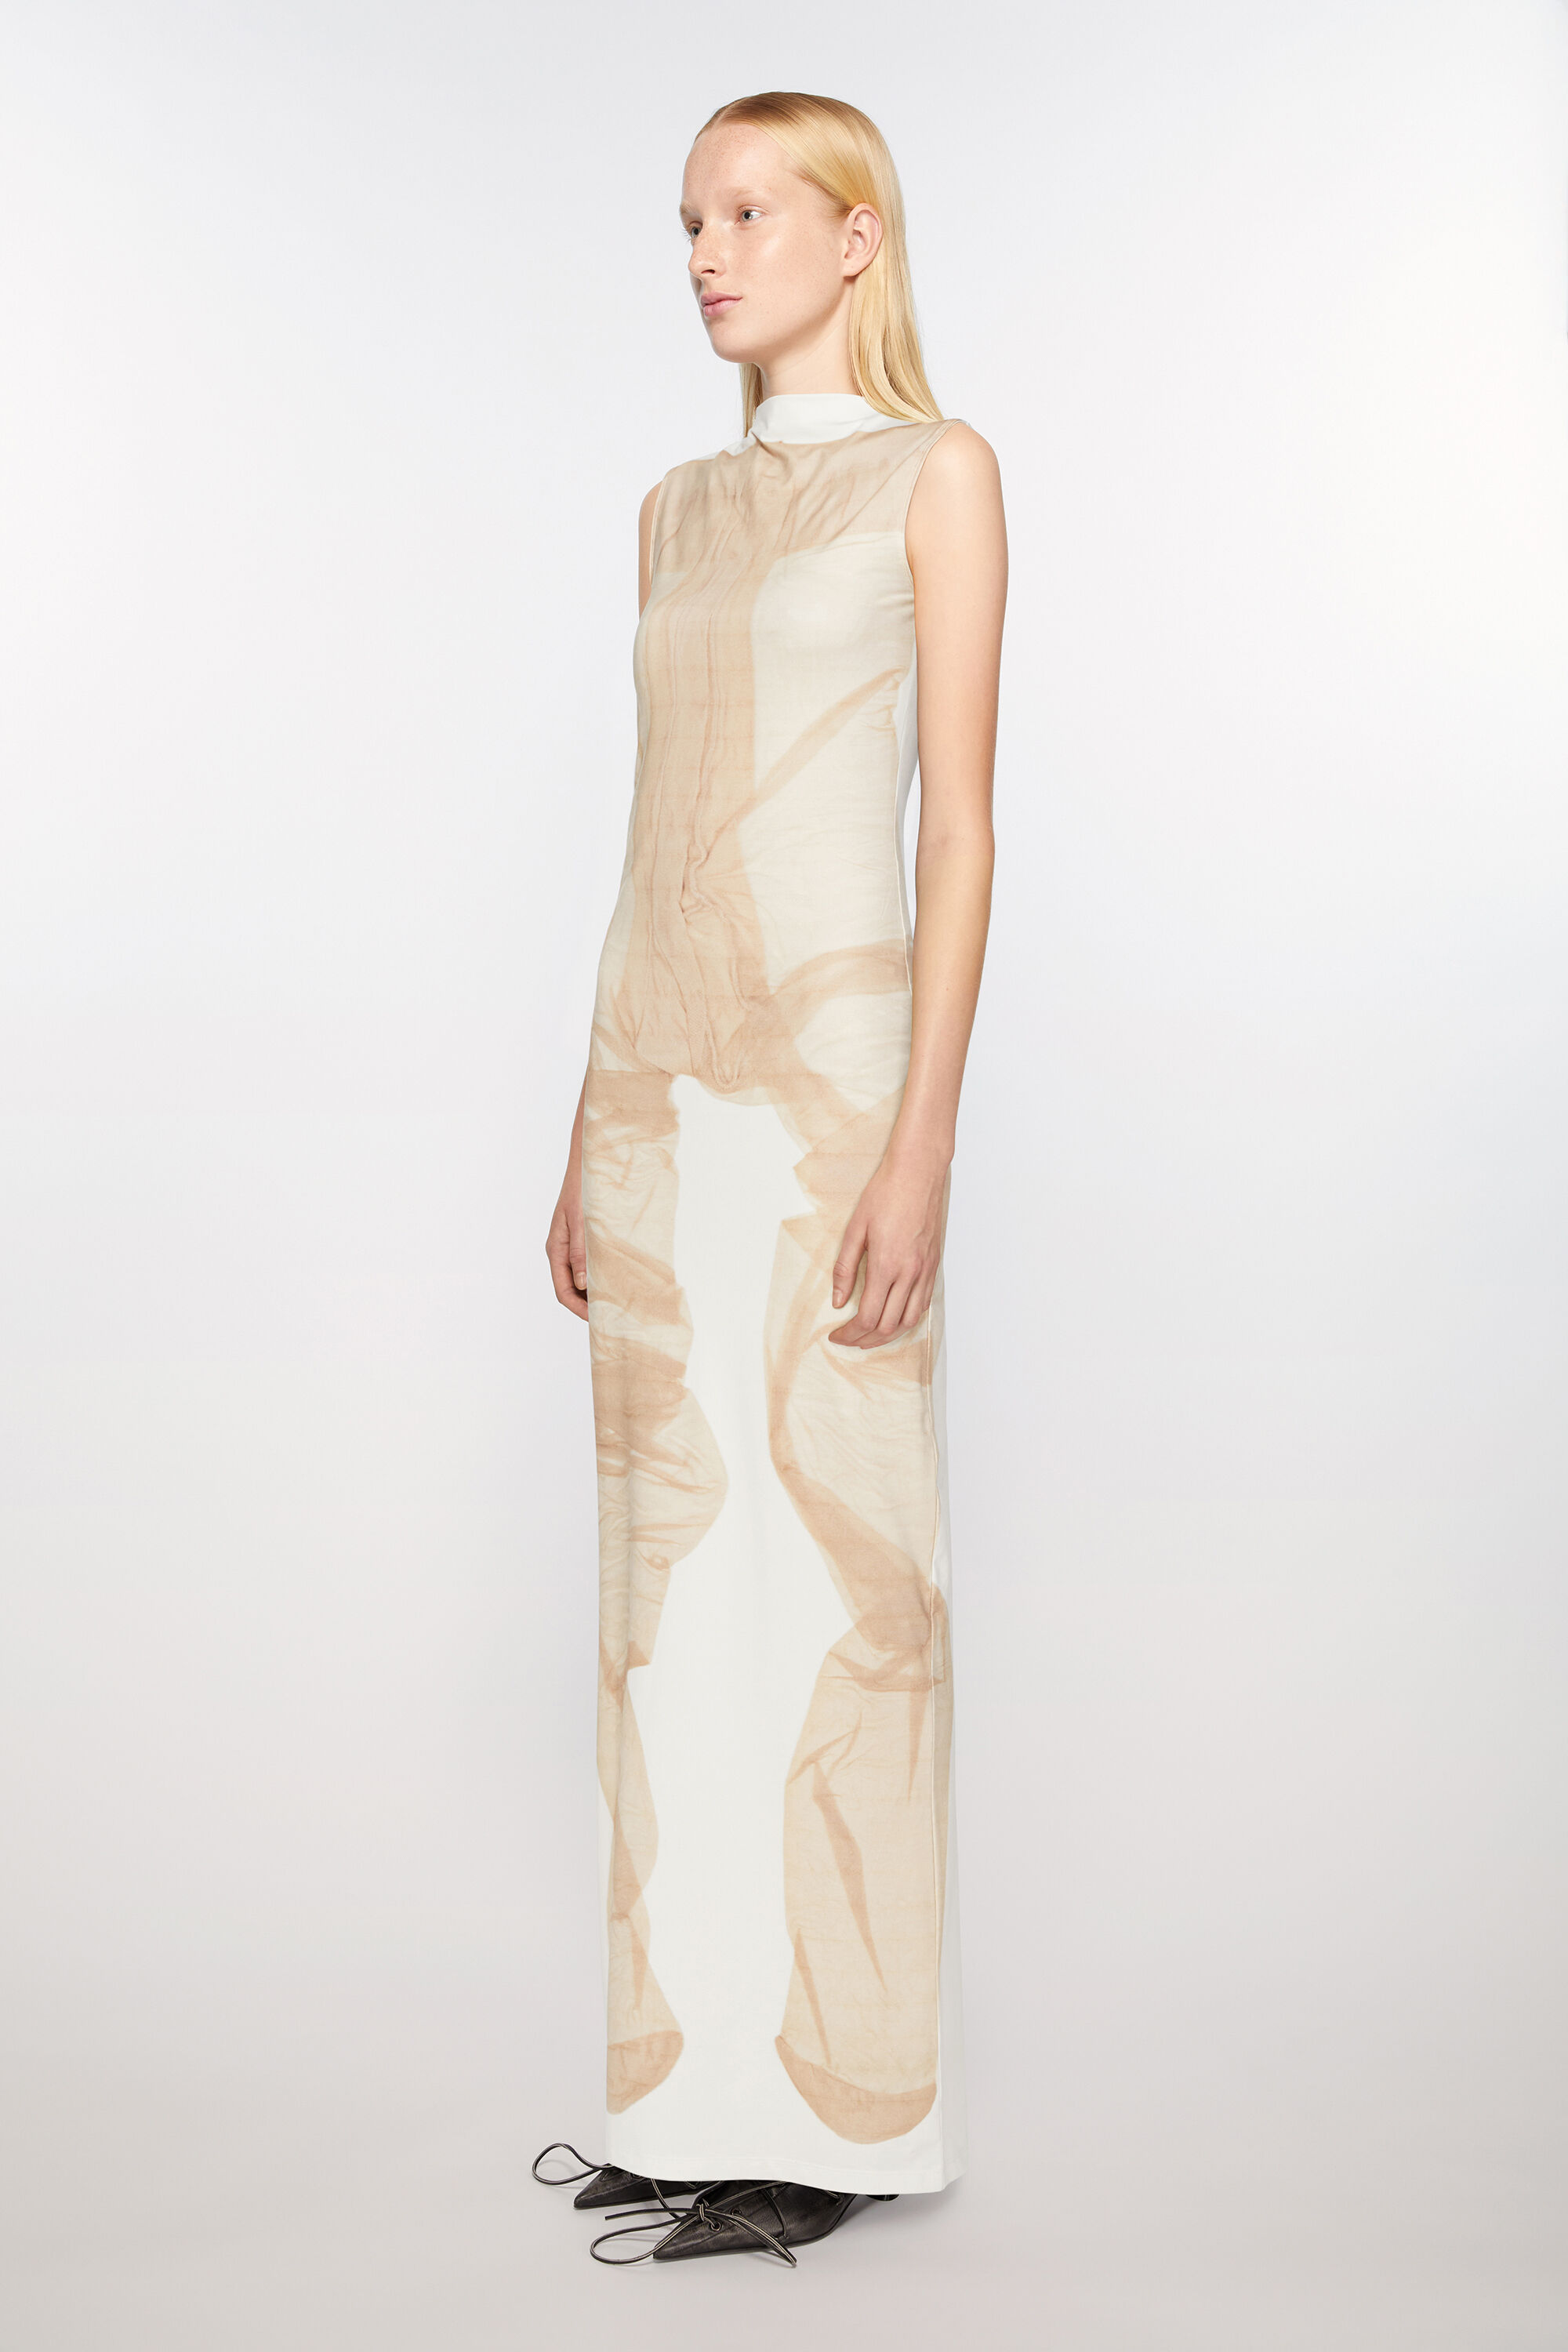 Acne Studios - Print long dress - White/beige